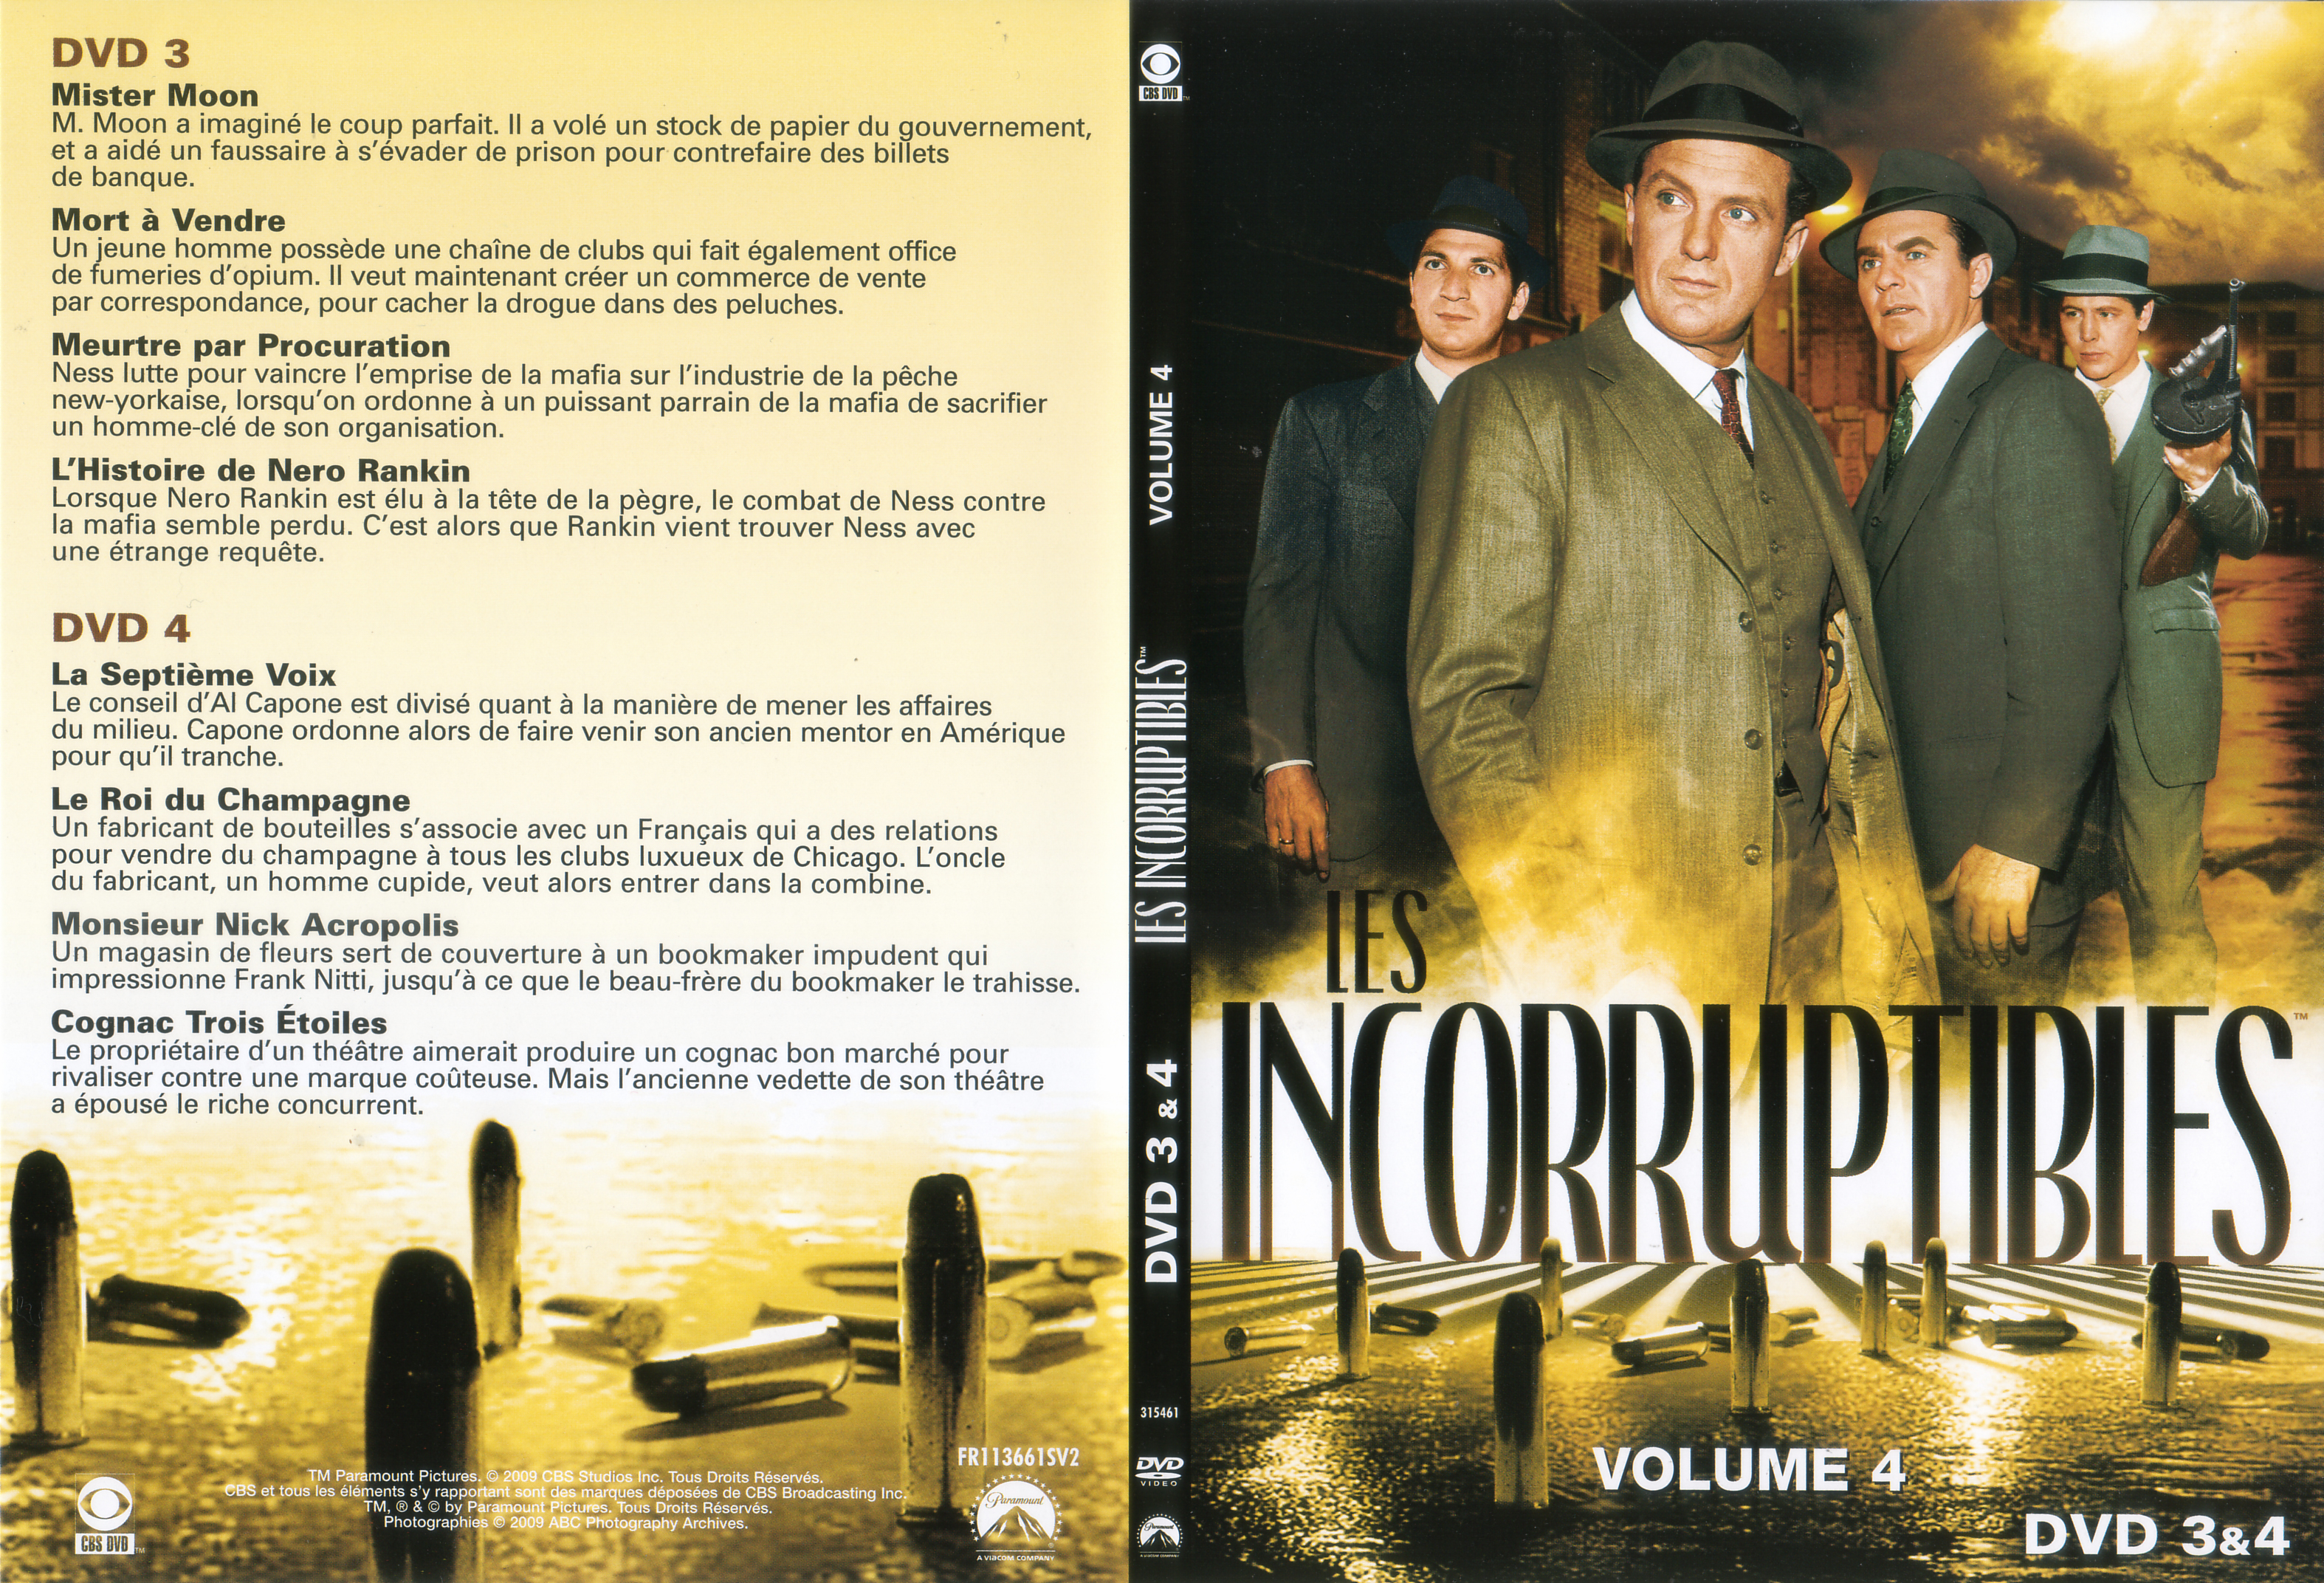 Jaquette DVD Les incorruptibles vol 04 DVD 2